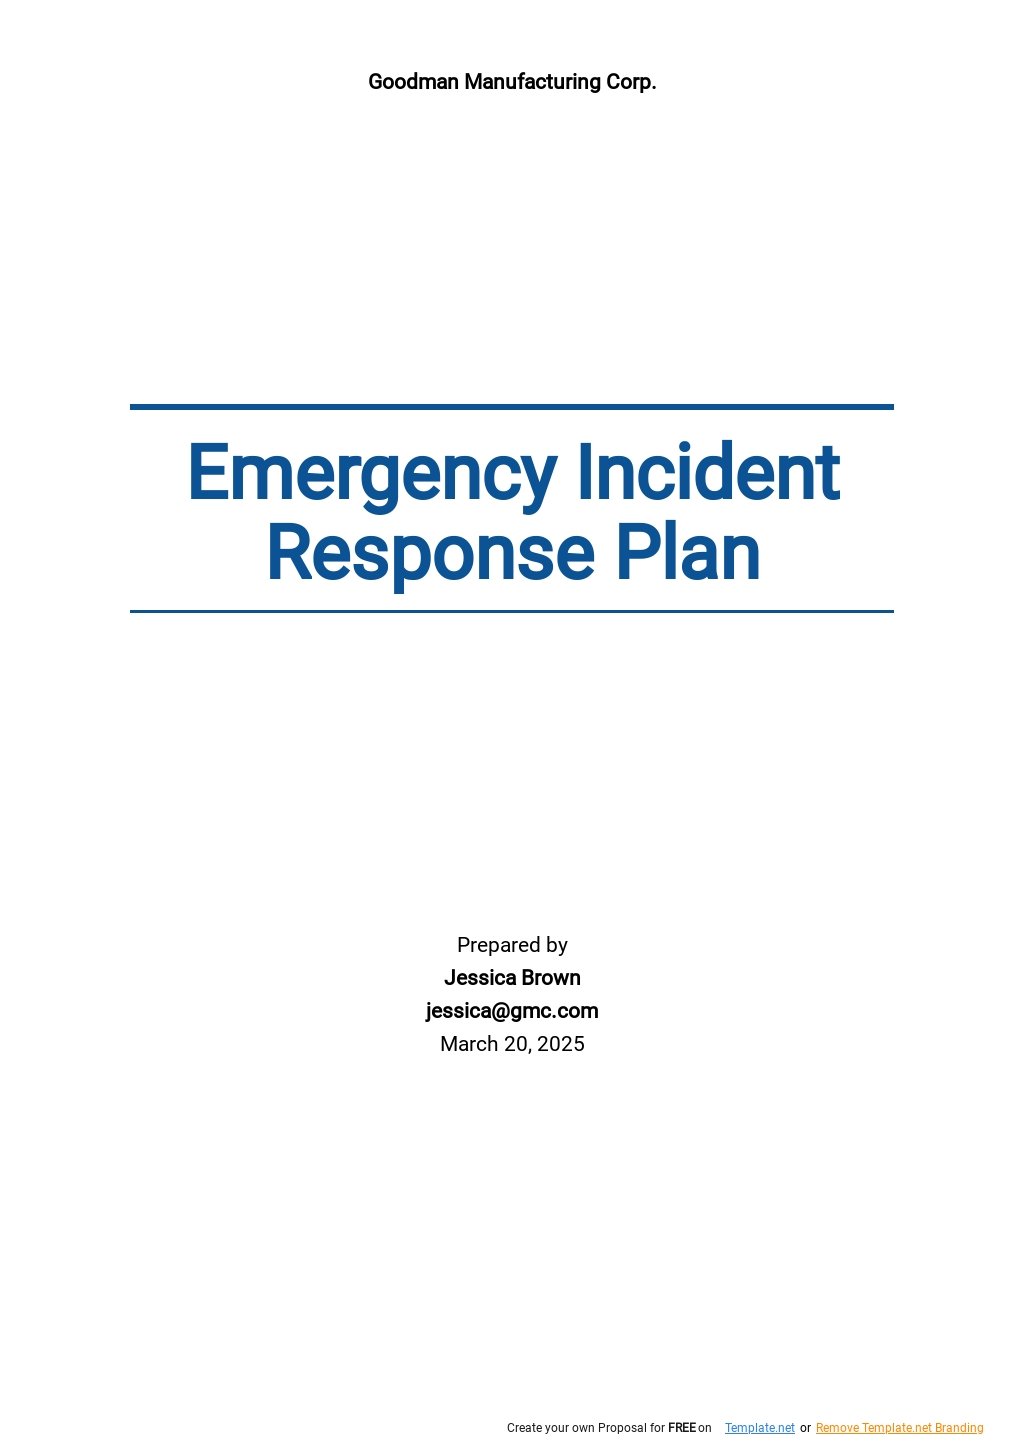 Emergency Incident Response Plan Template.jpe